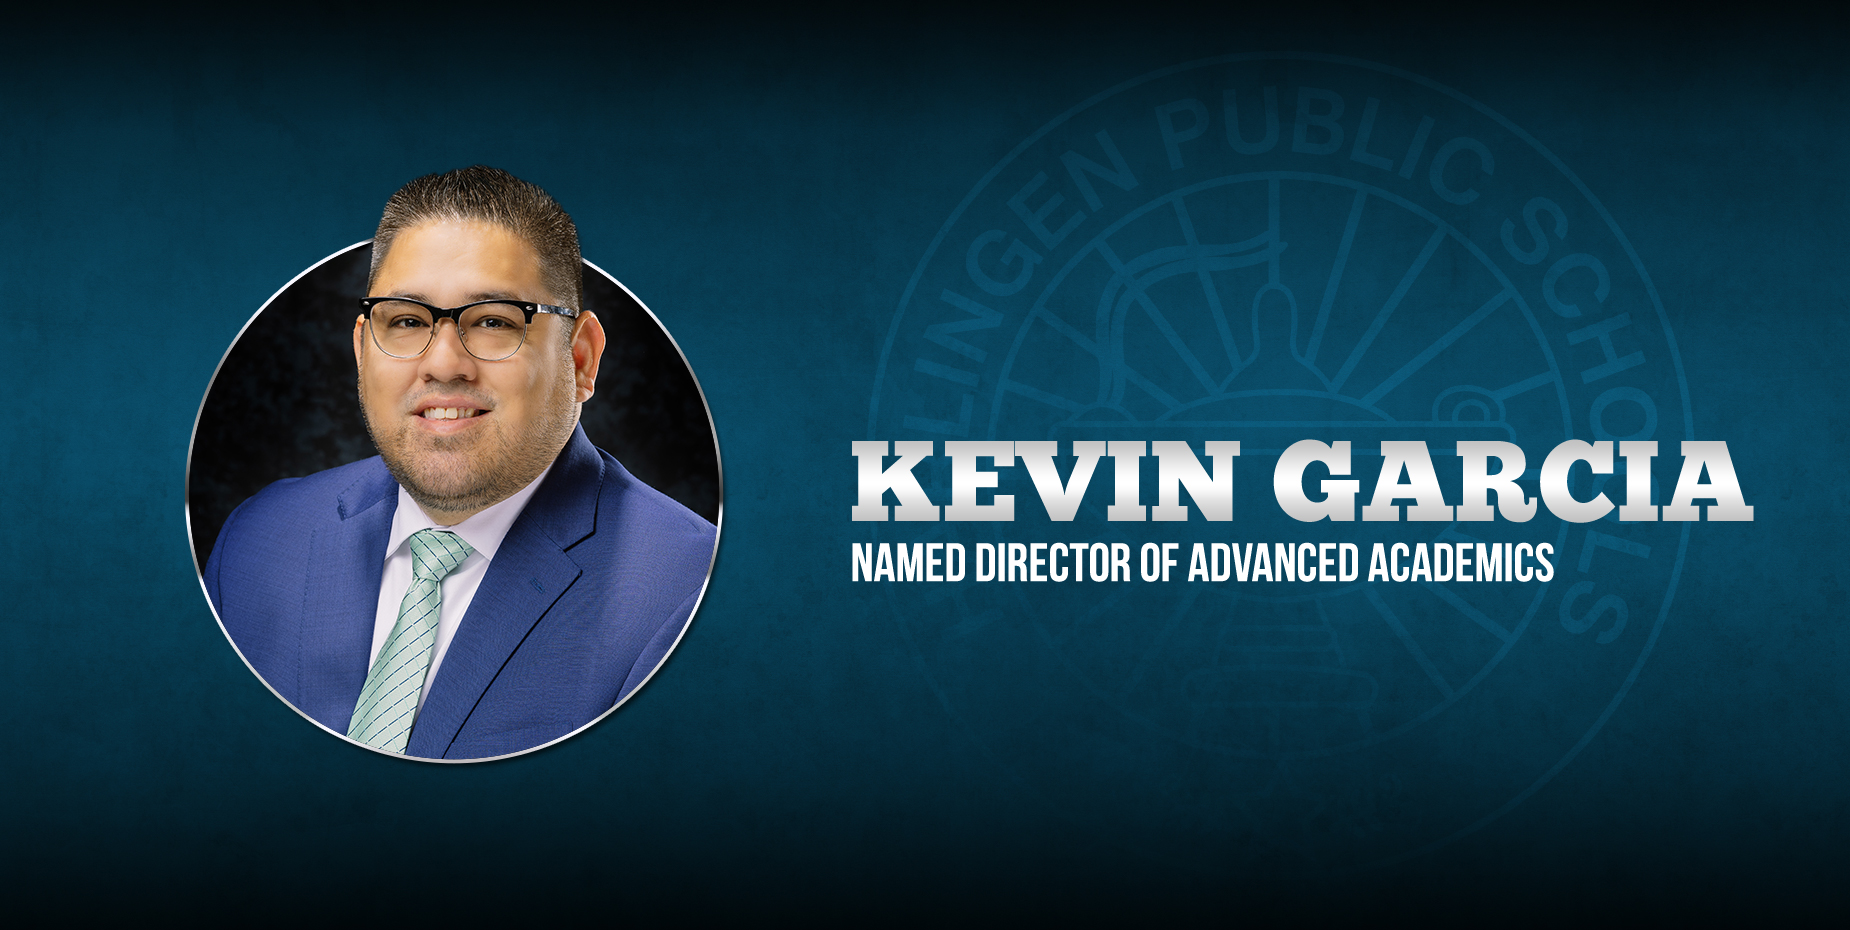 Kevin Garcia named Director of Advanced Academics